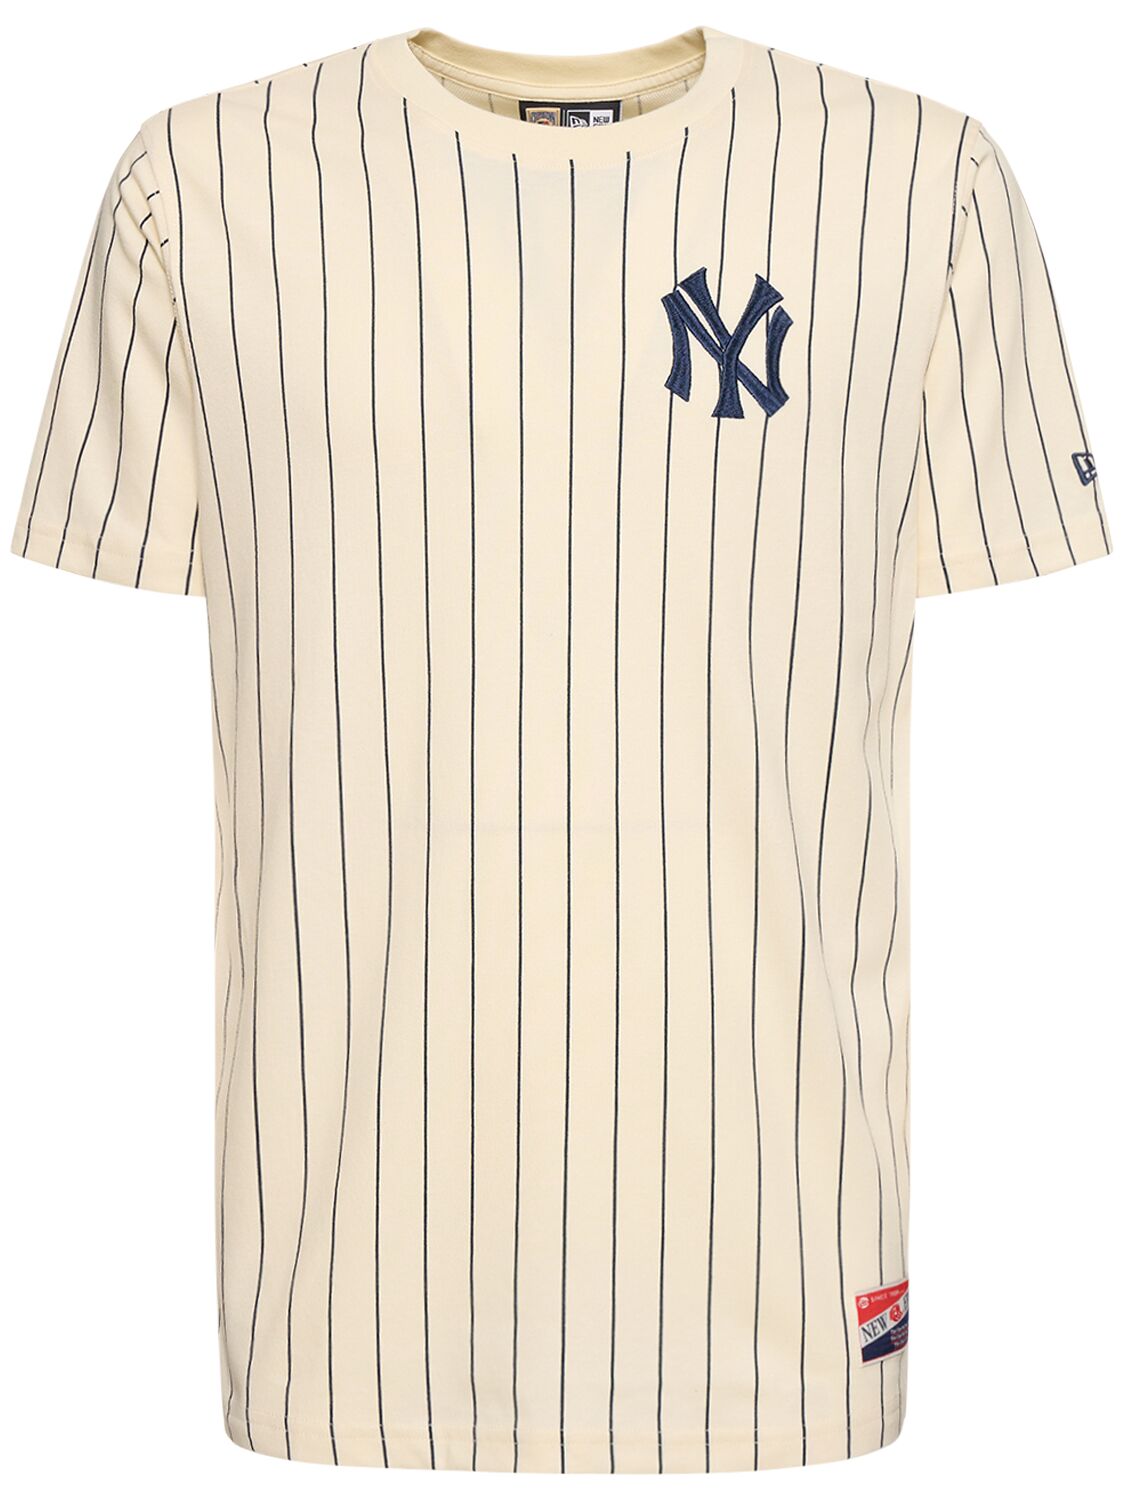 New Era Cooperstown New York Yankees T-shirt In White,blue